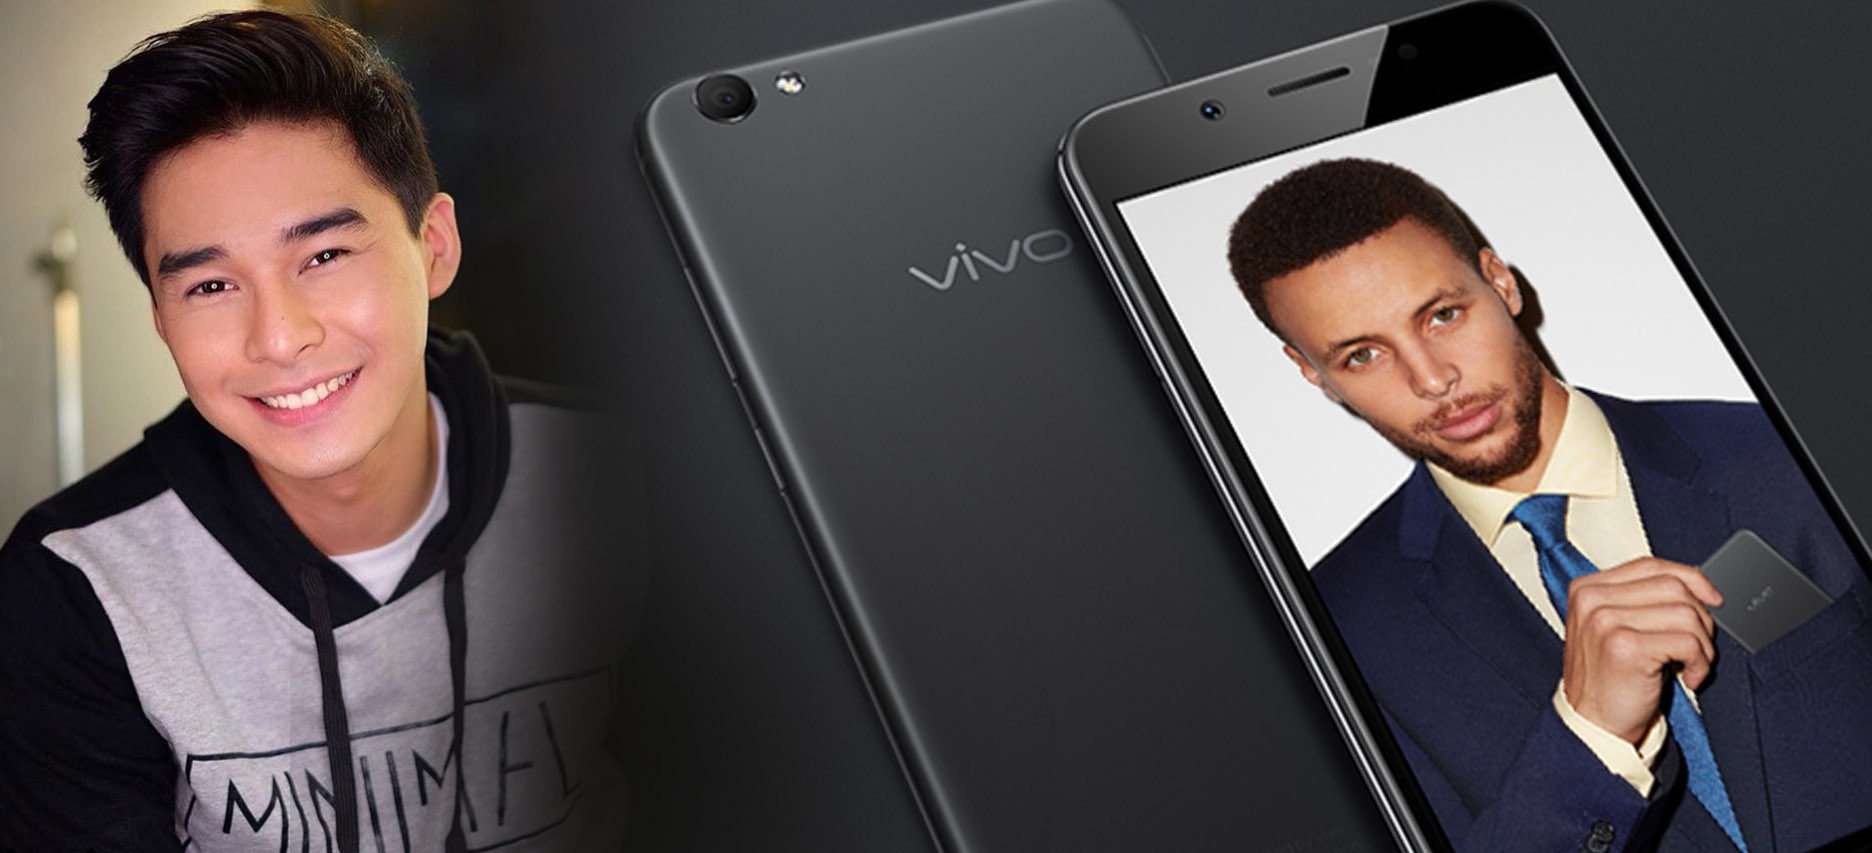 Vivo V5s Matte Black launch kicks off SM Cybermonth together with McCoy de Leon